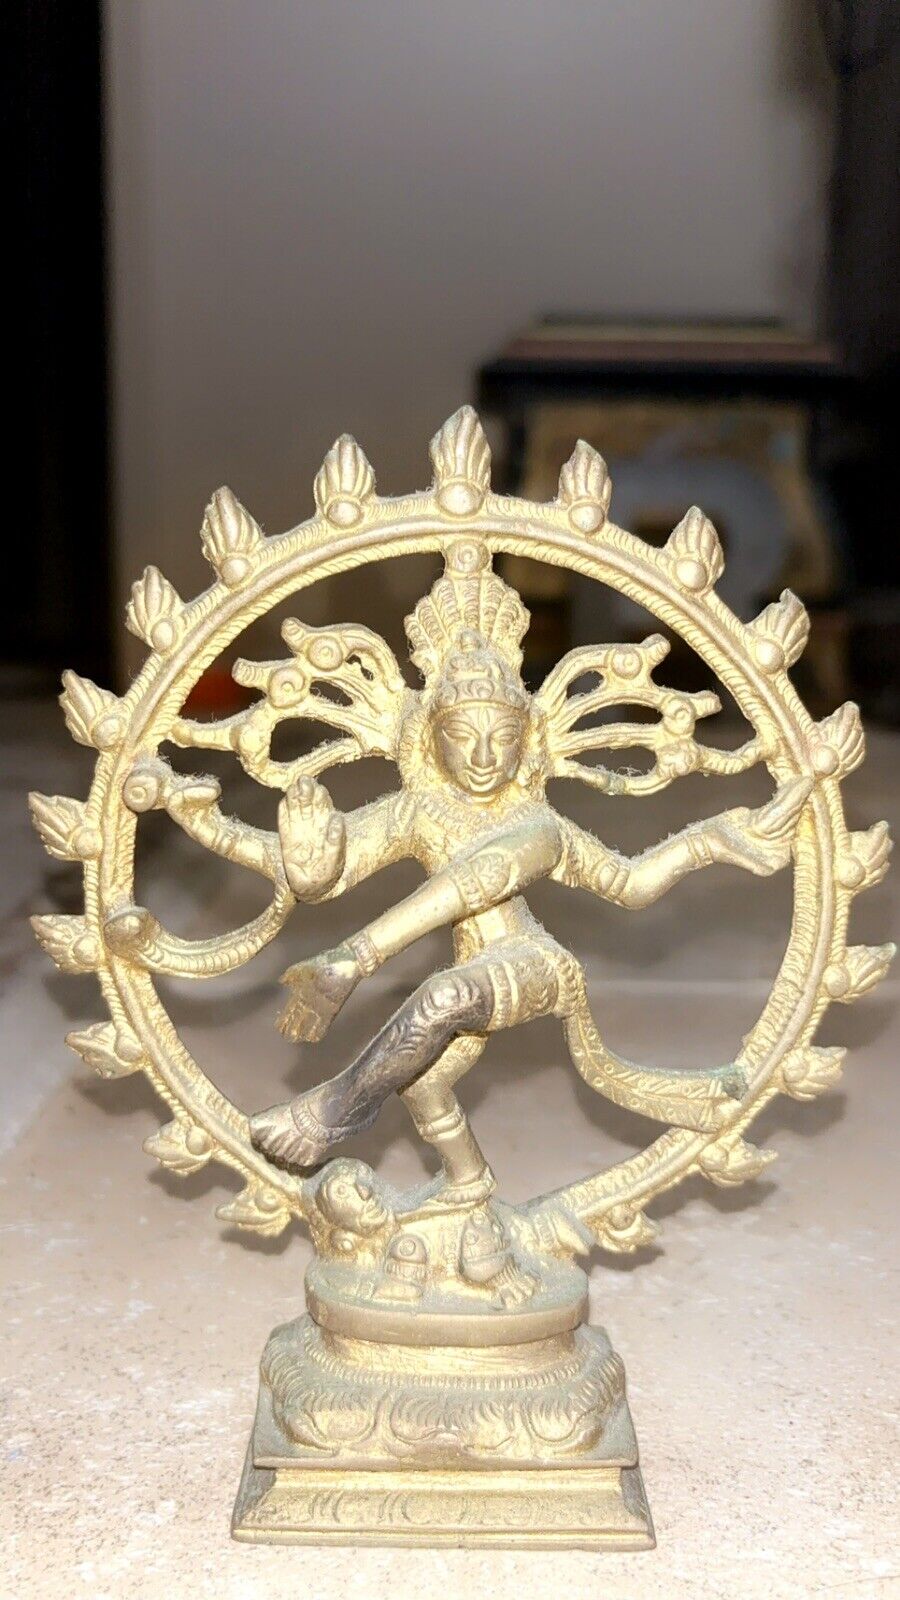 Nataraja Lord Shiva Hindu Goddess Of Dance Solid Brass Vintage Statue